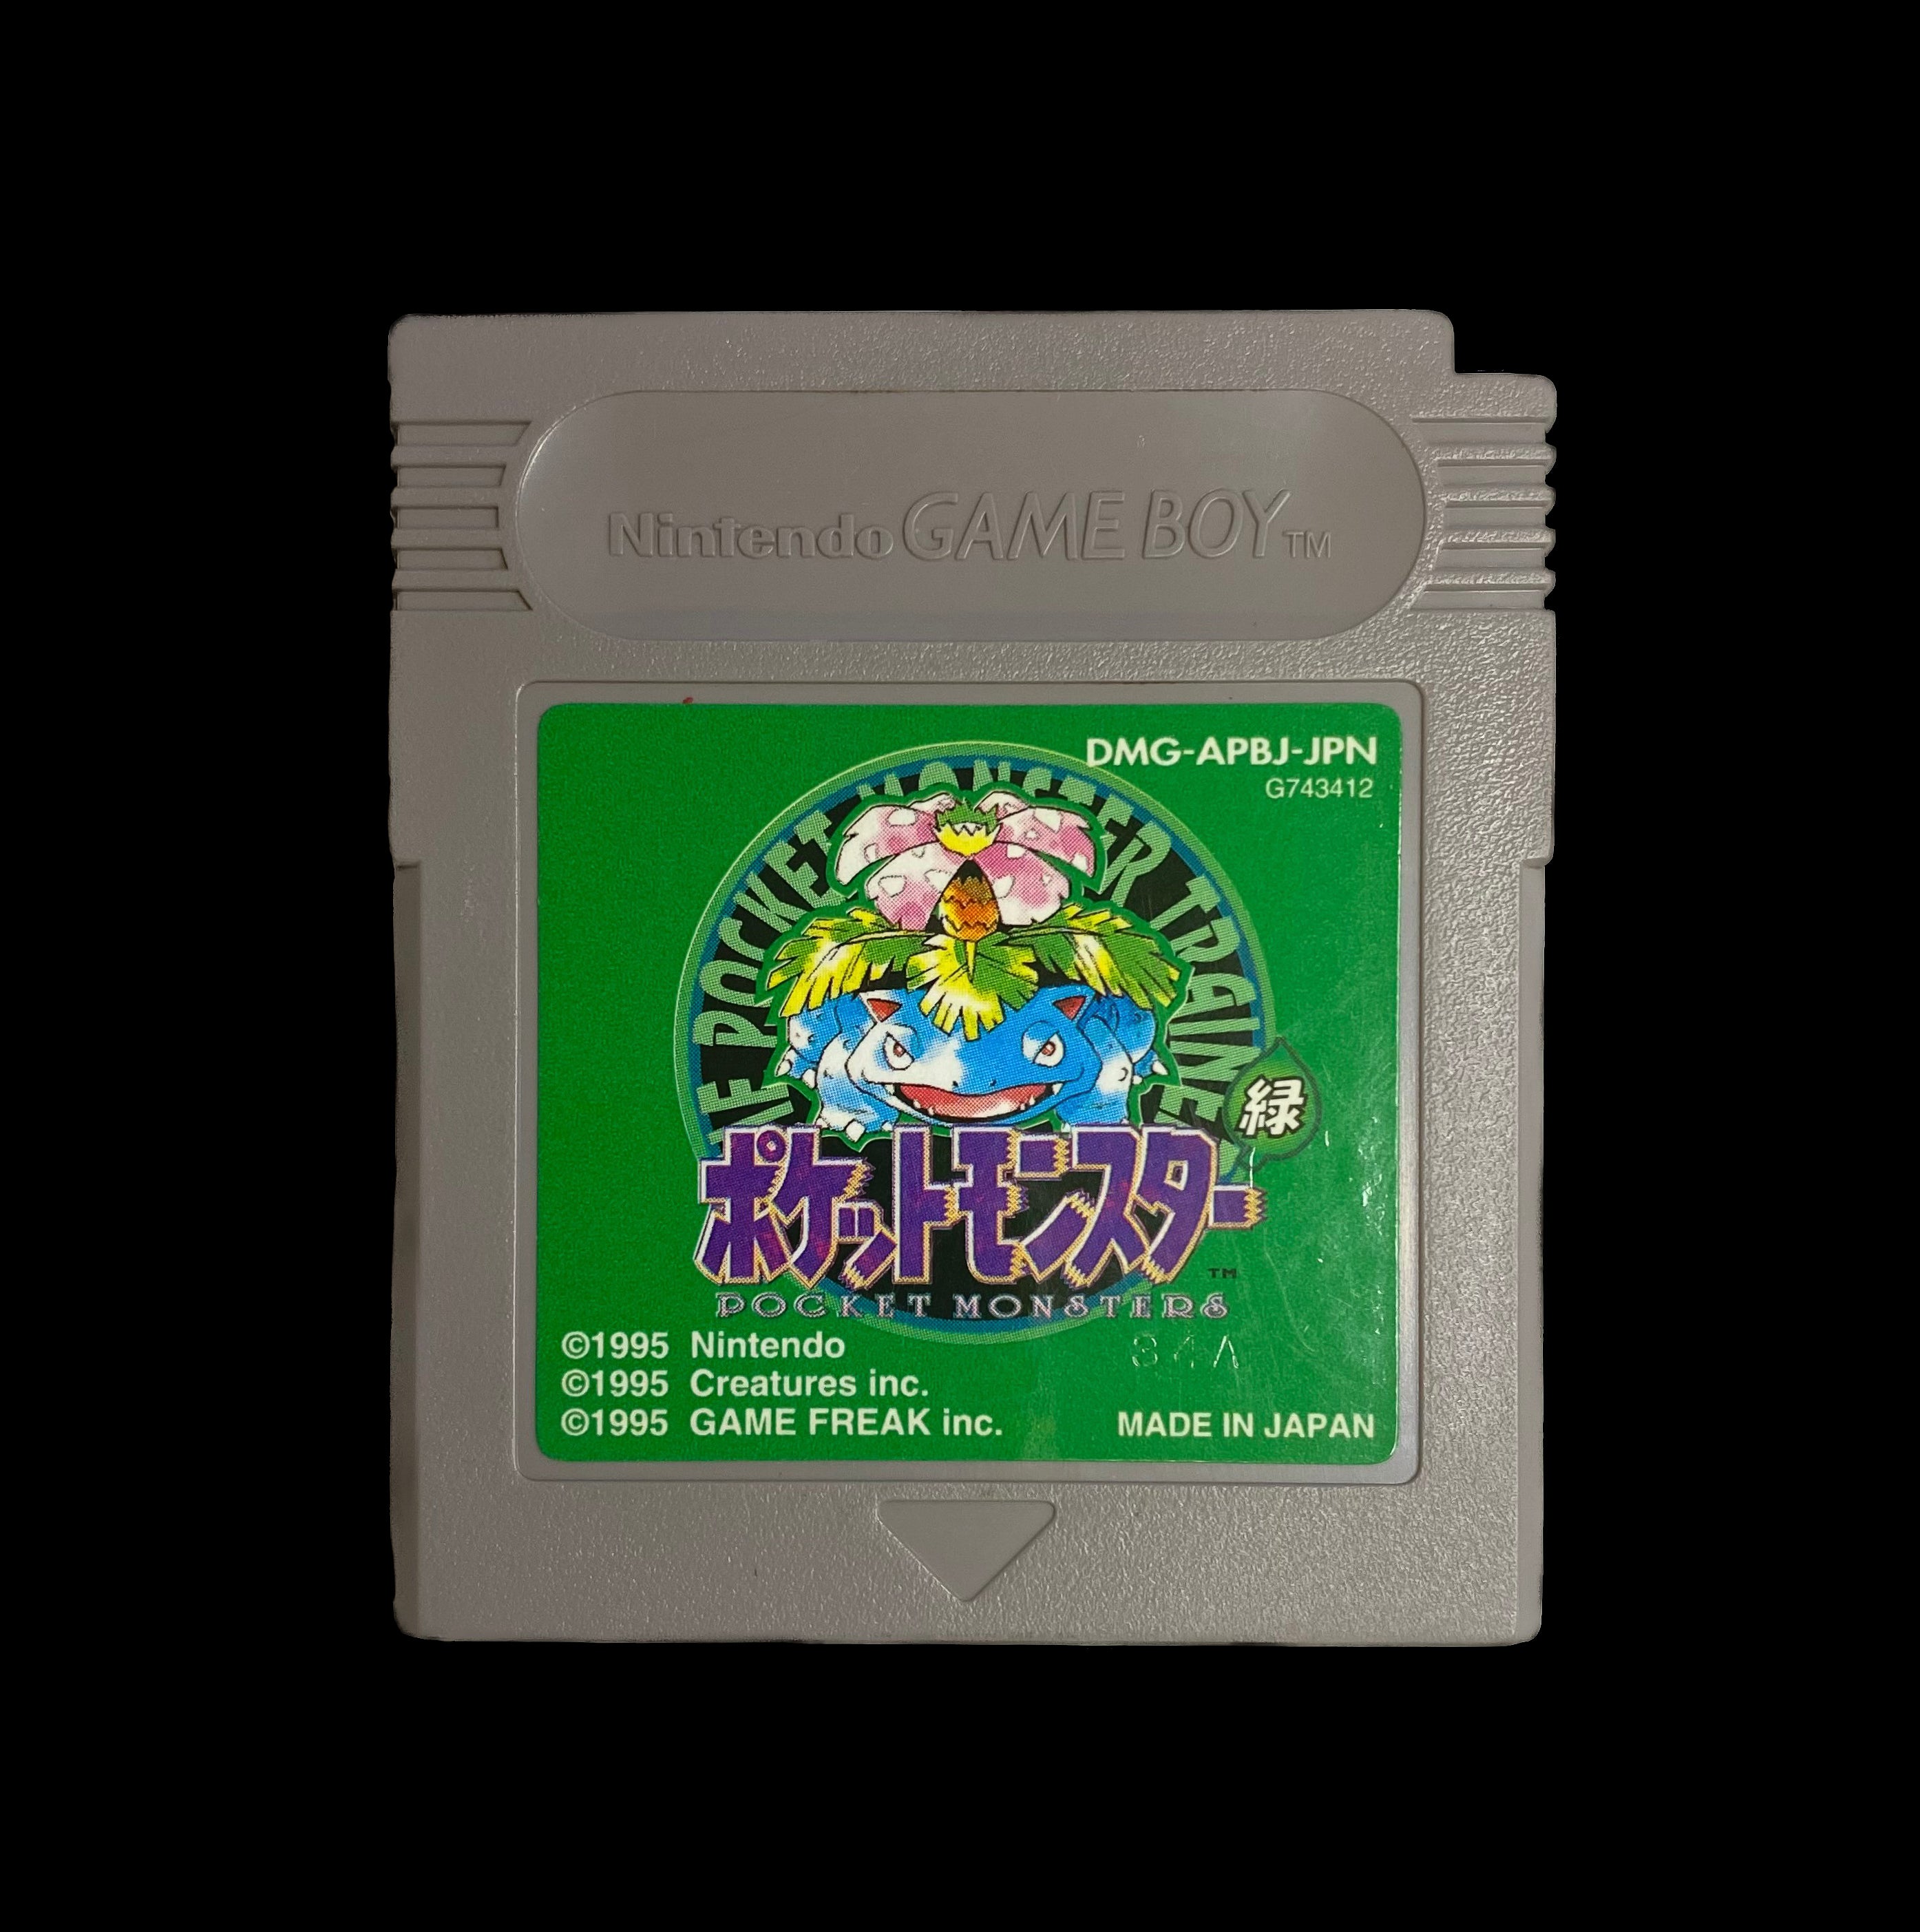 Pocket Monsters Pokemon Midori/Green (Japanese)